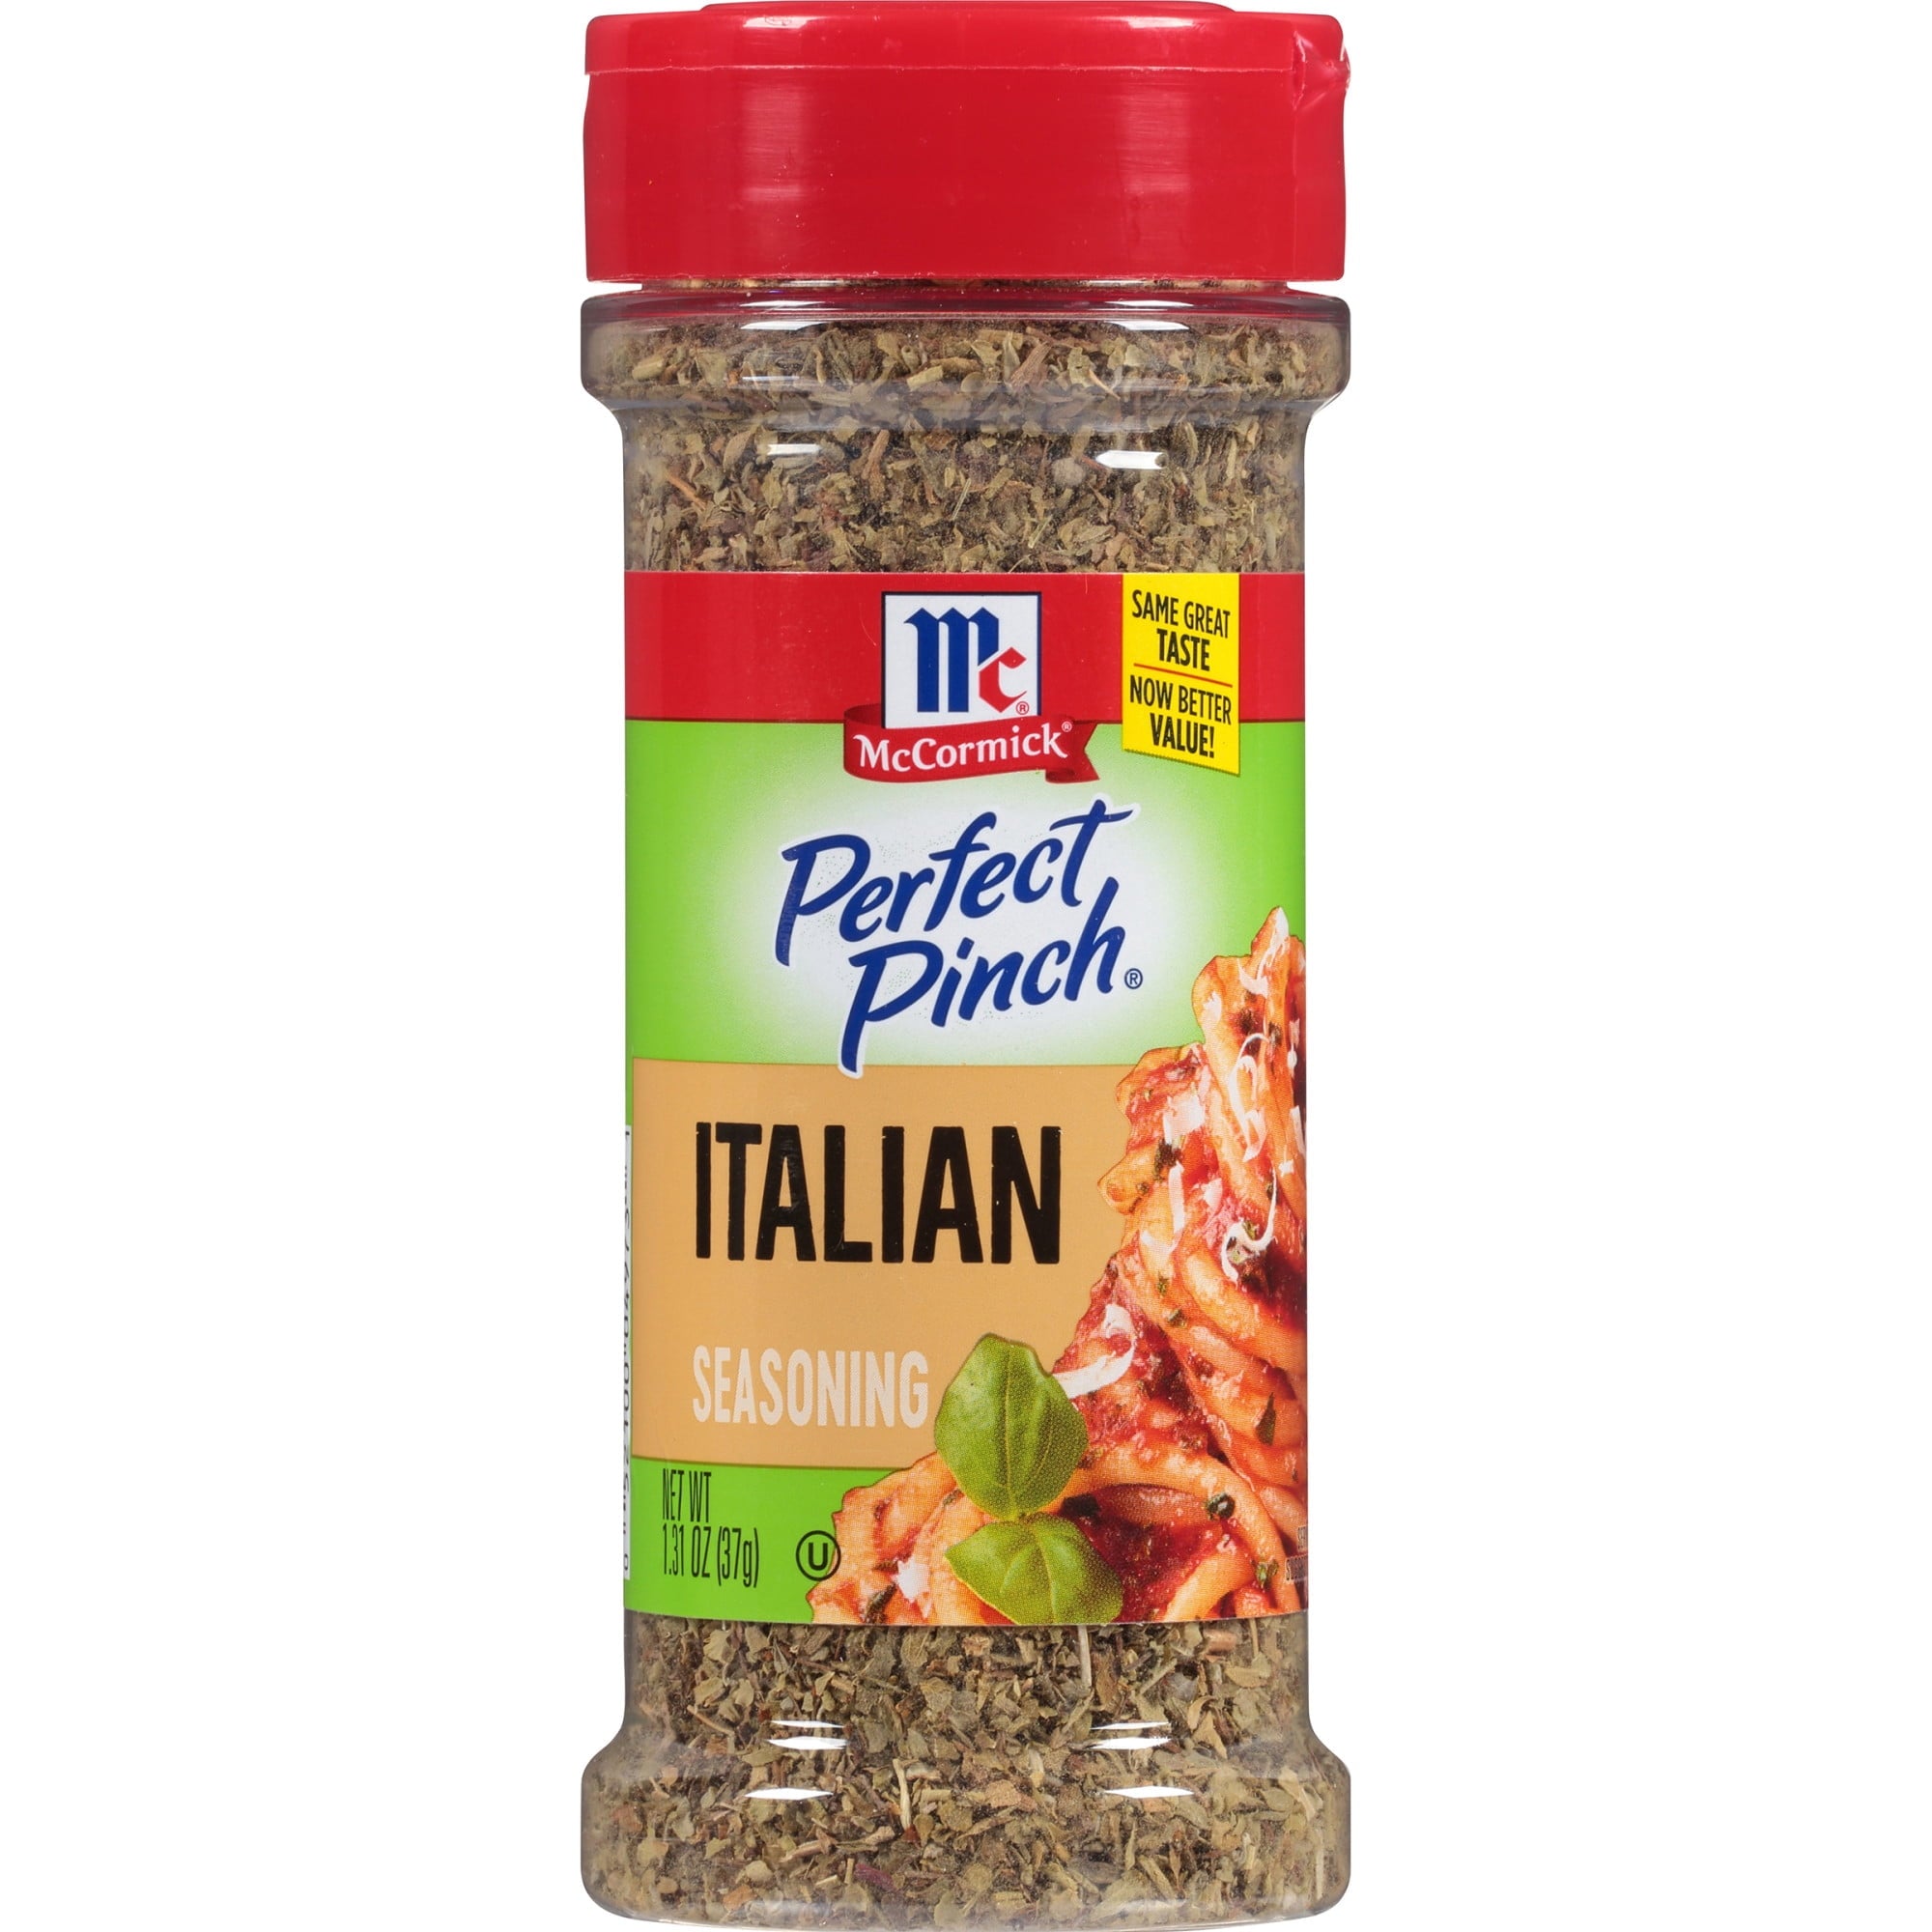 Mccormick Perfect Pinch Seasoning, Italian - 1.31 oz